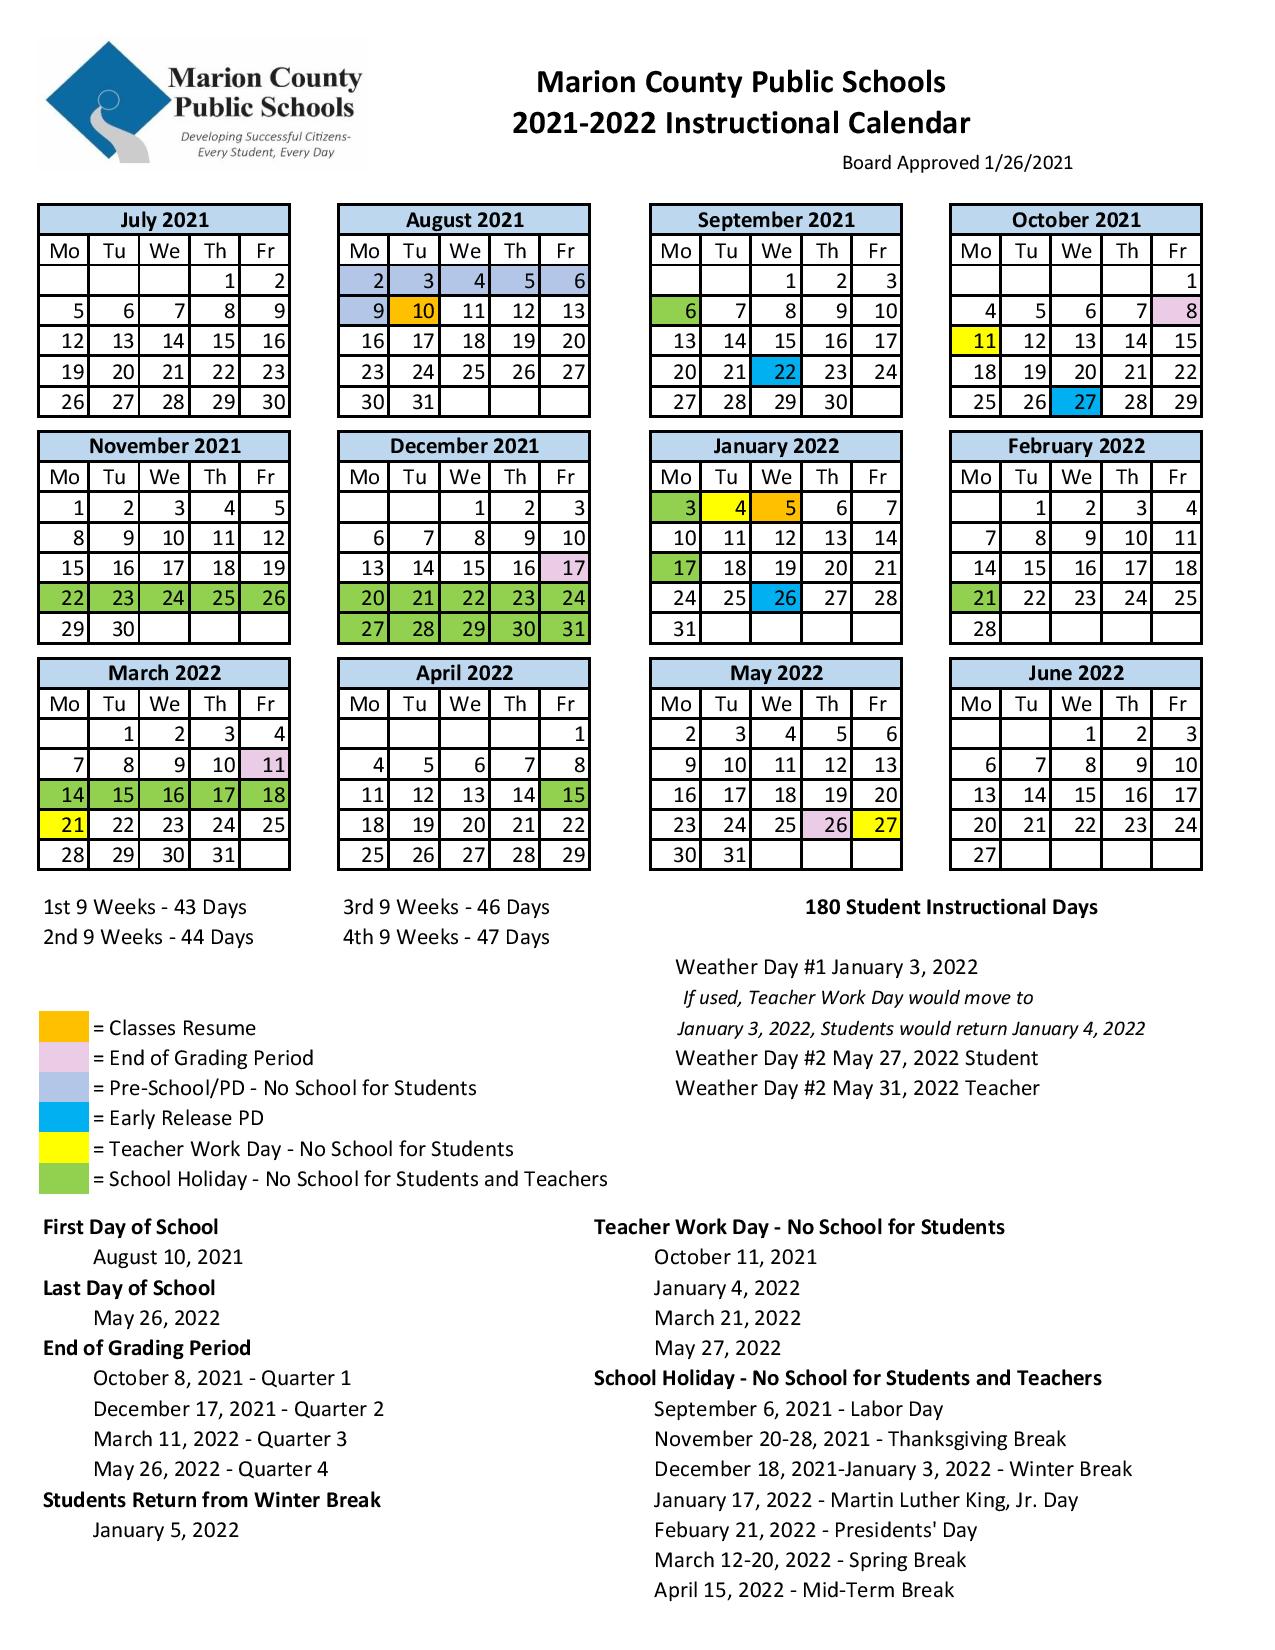 Mcps Calendar 2022 Marion County Public Schools Calendar 2021-2022